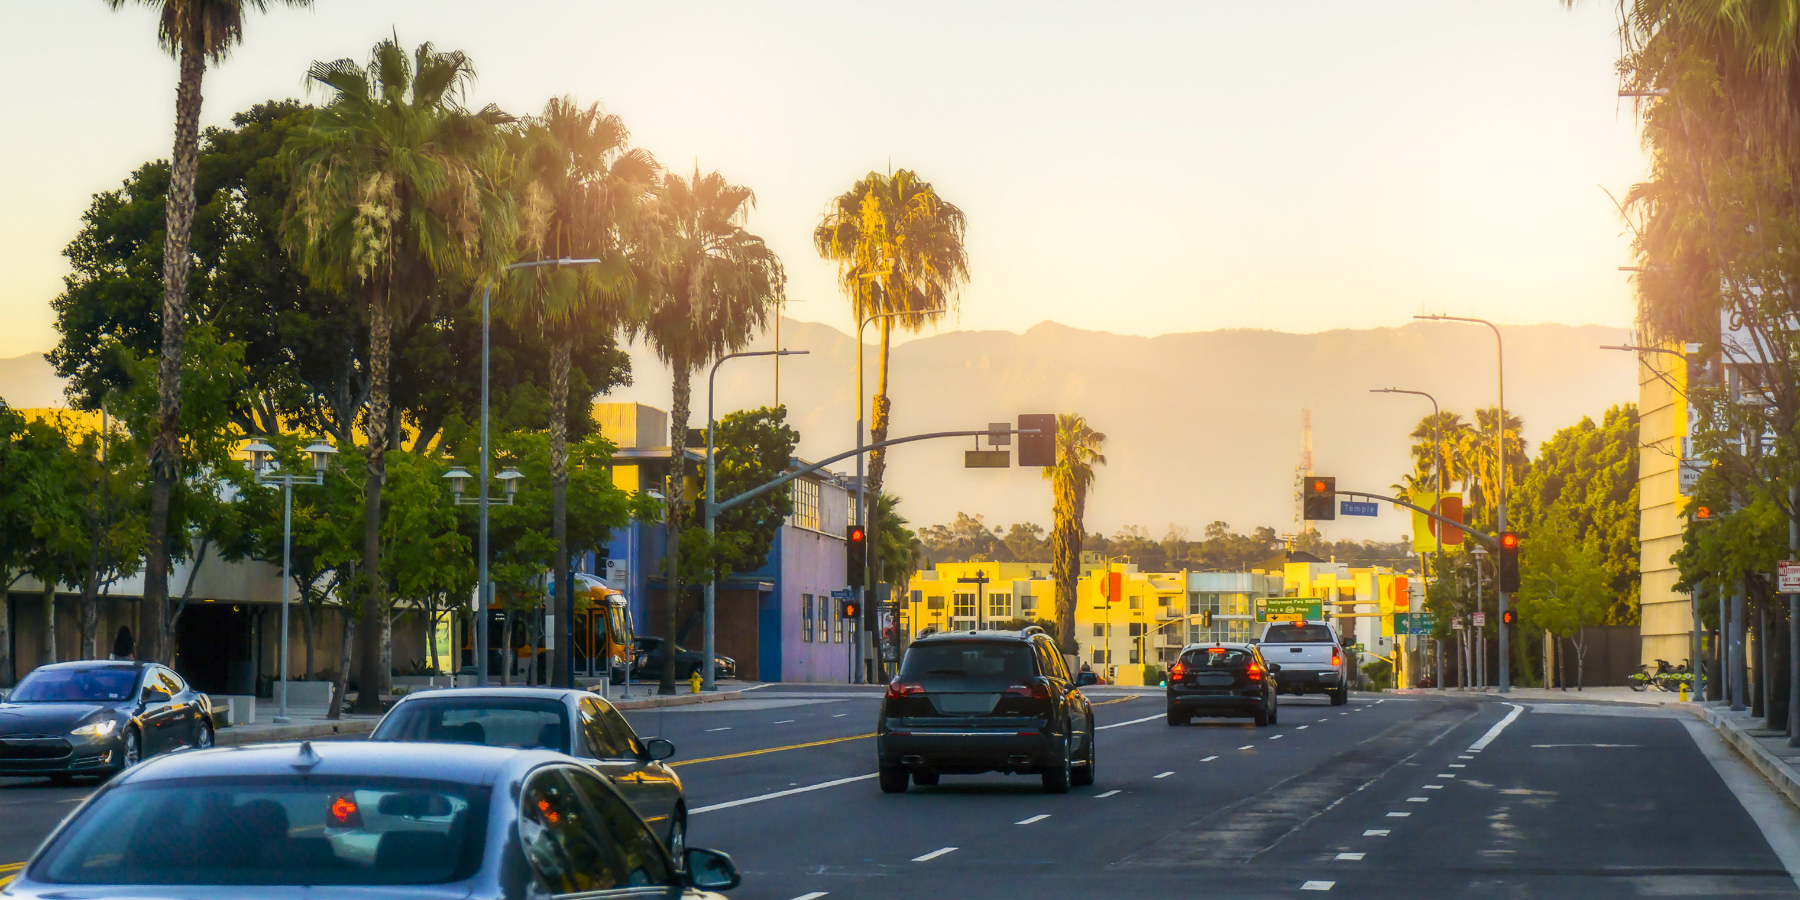 Los Angeles Street At Sunset